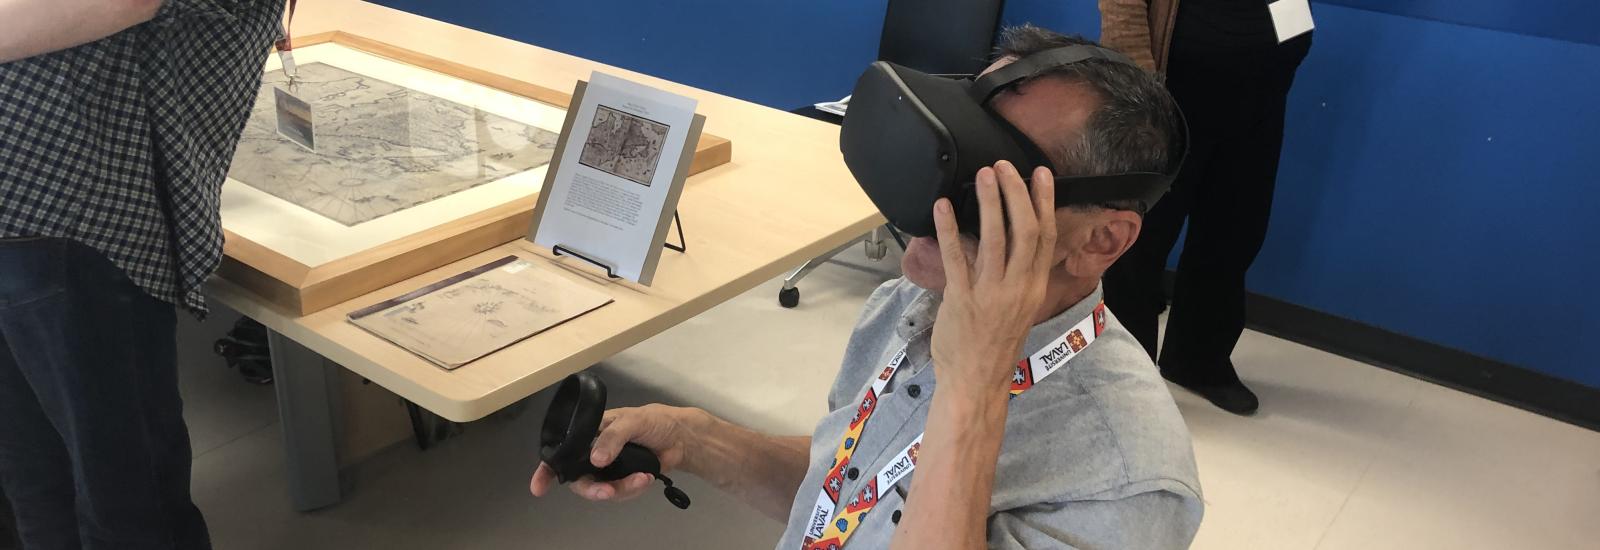 man in a light gray shirt using a VR headset